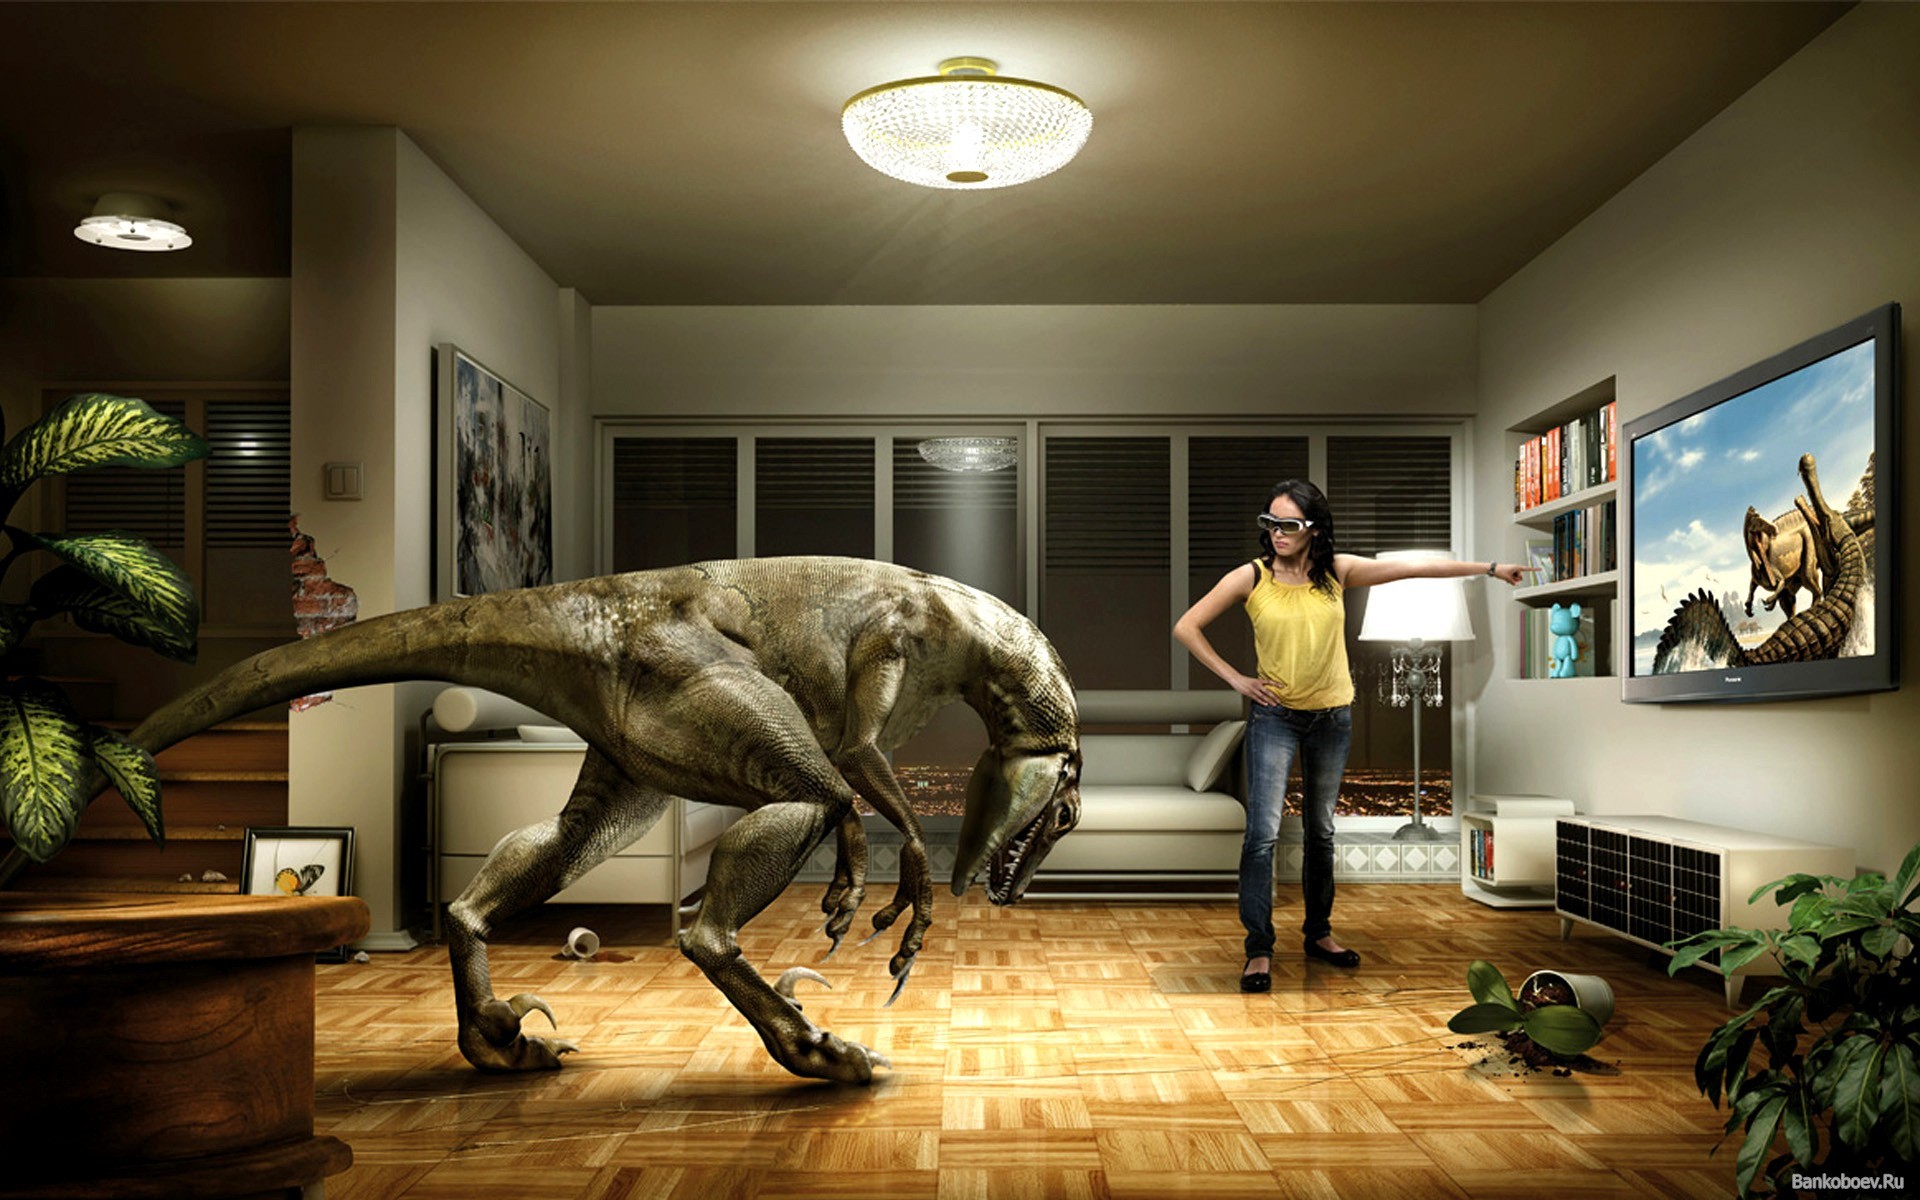 General 1920x1200 dinosaurs room TV virtual reality headsets humor video games meta digital art women indoors standing animals